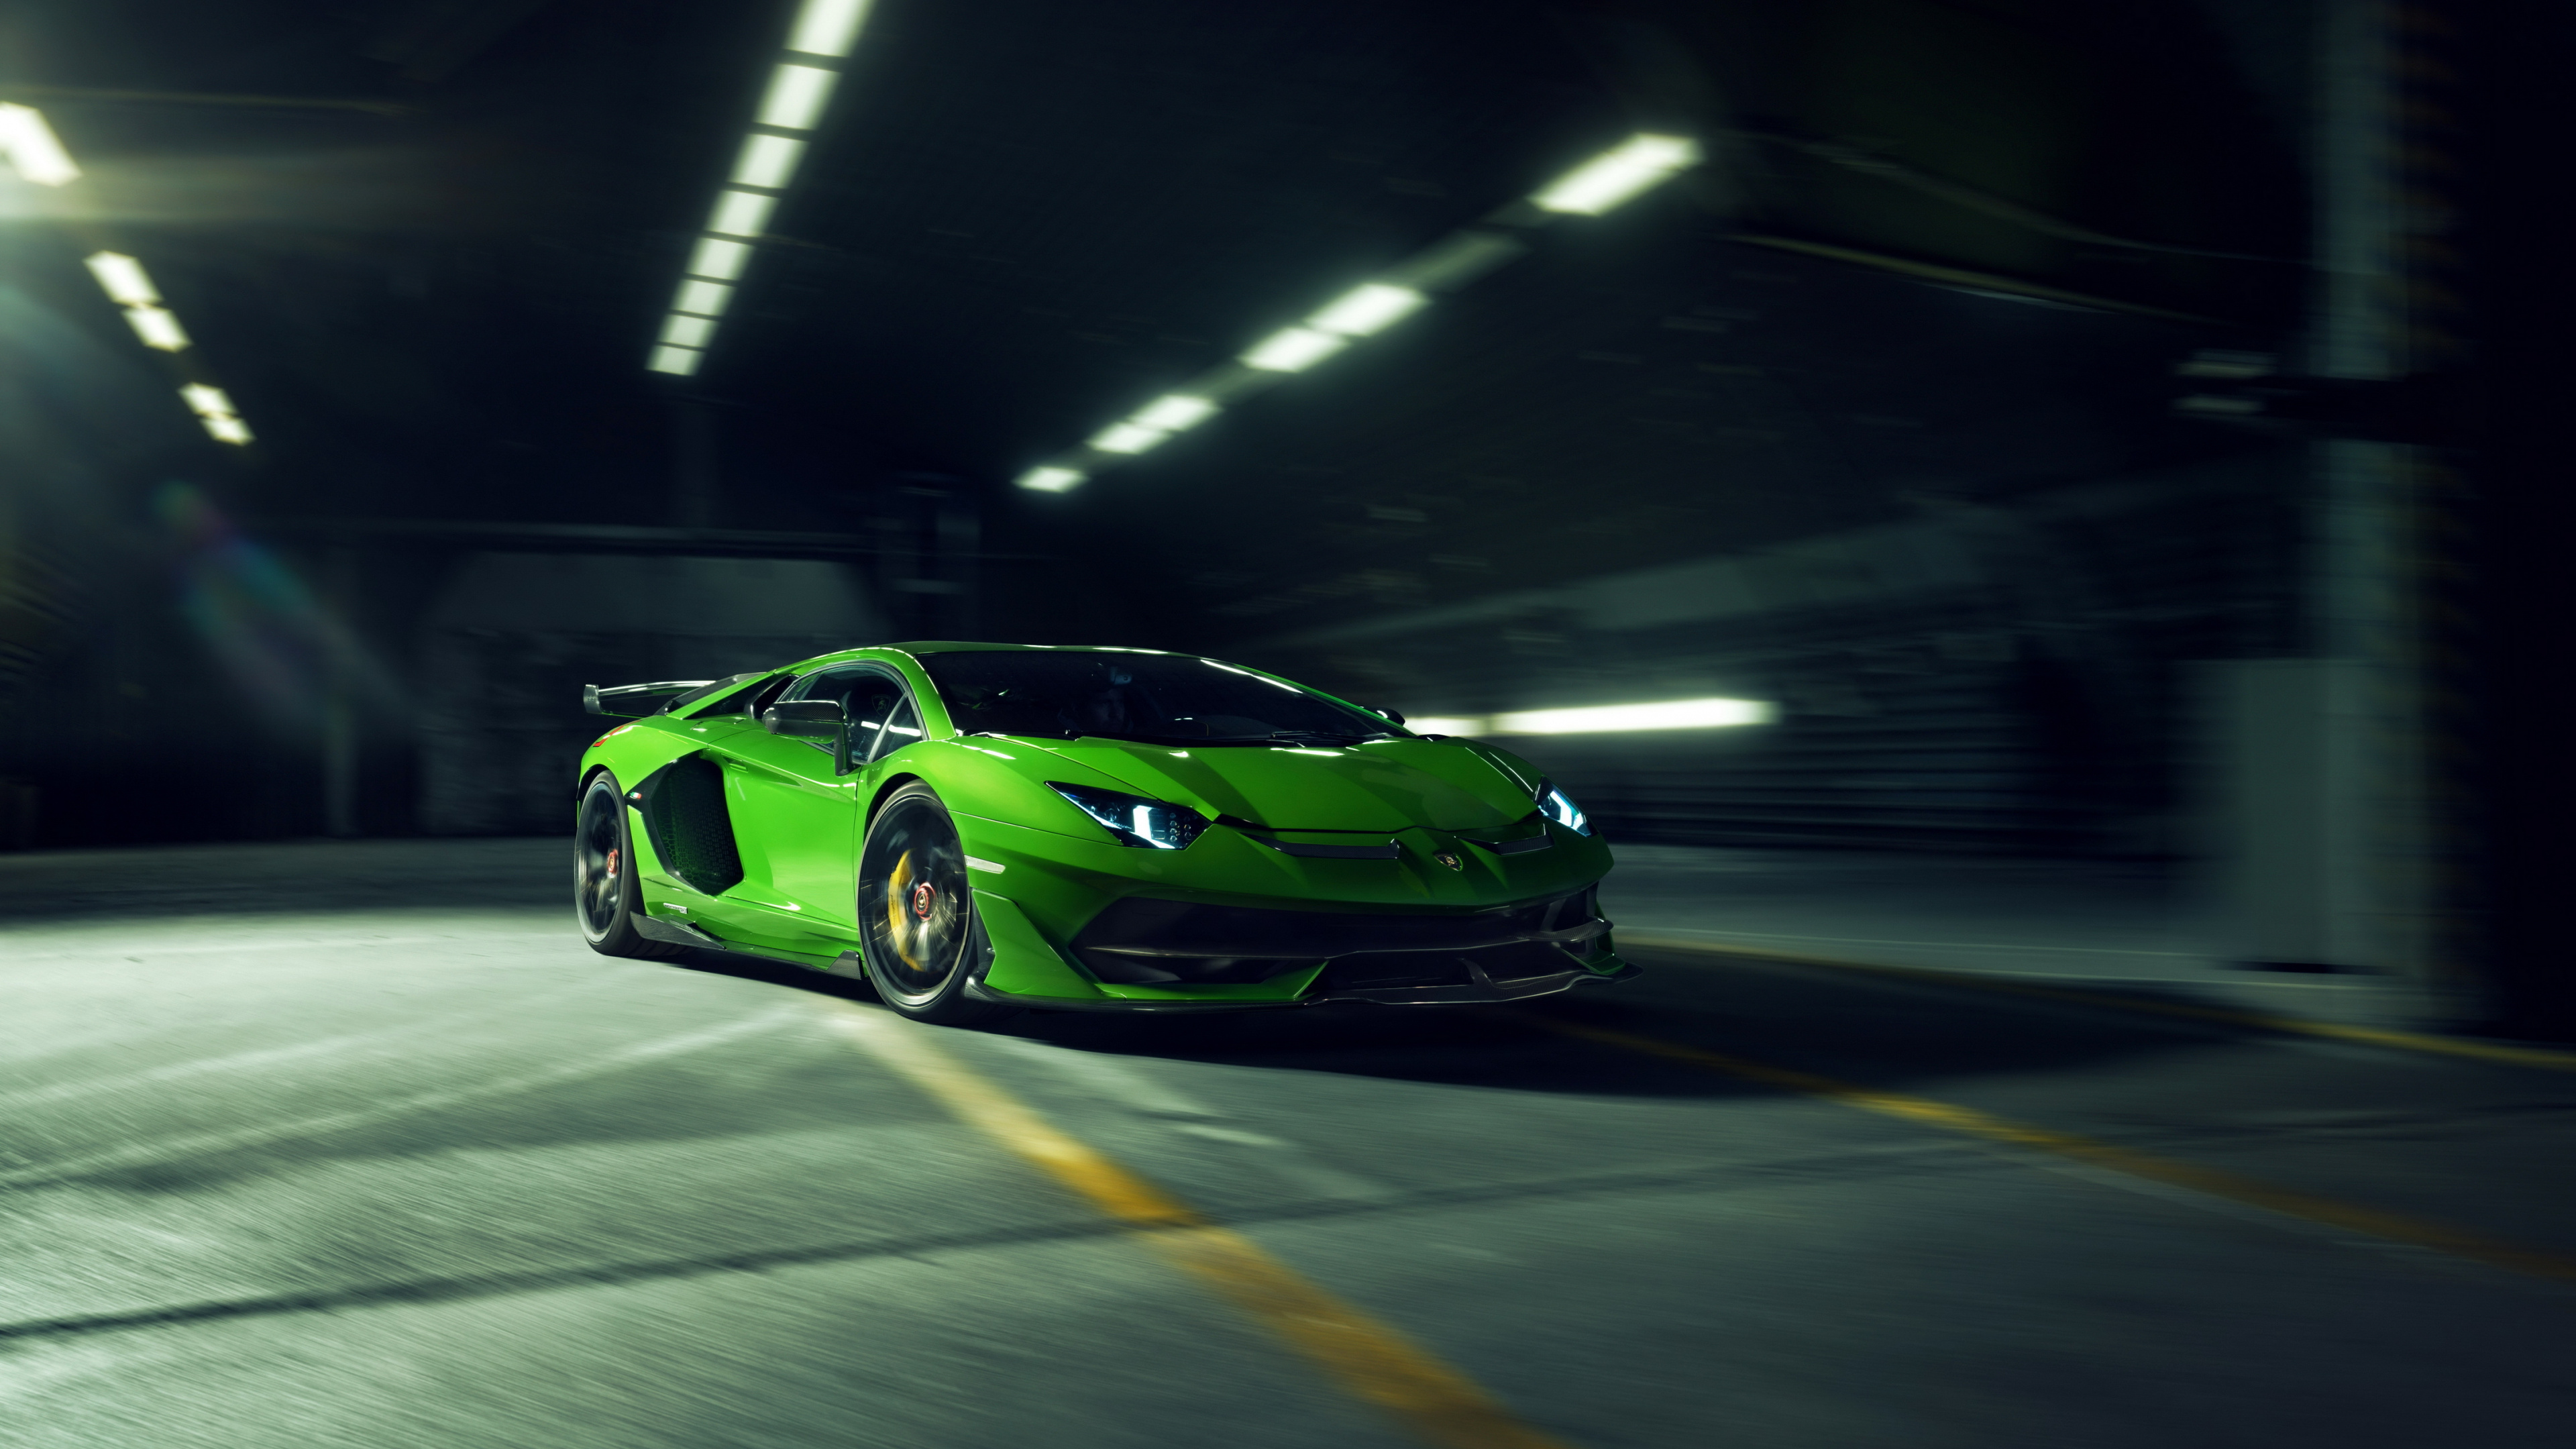 Aventador SVJ, Green car, 4K wallpaper, Widescreen background, 3840x2160 4K Desktop